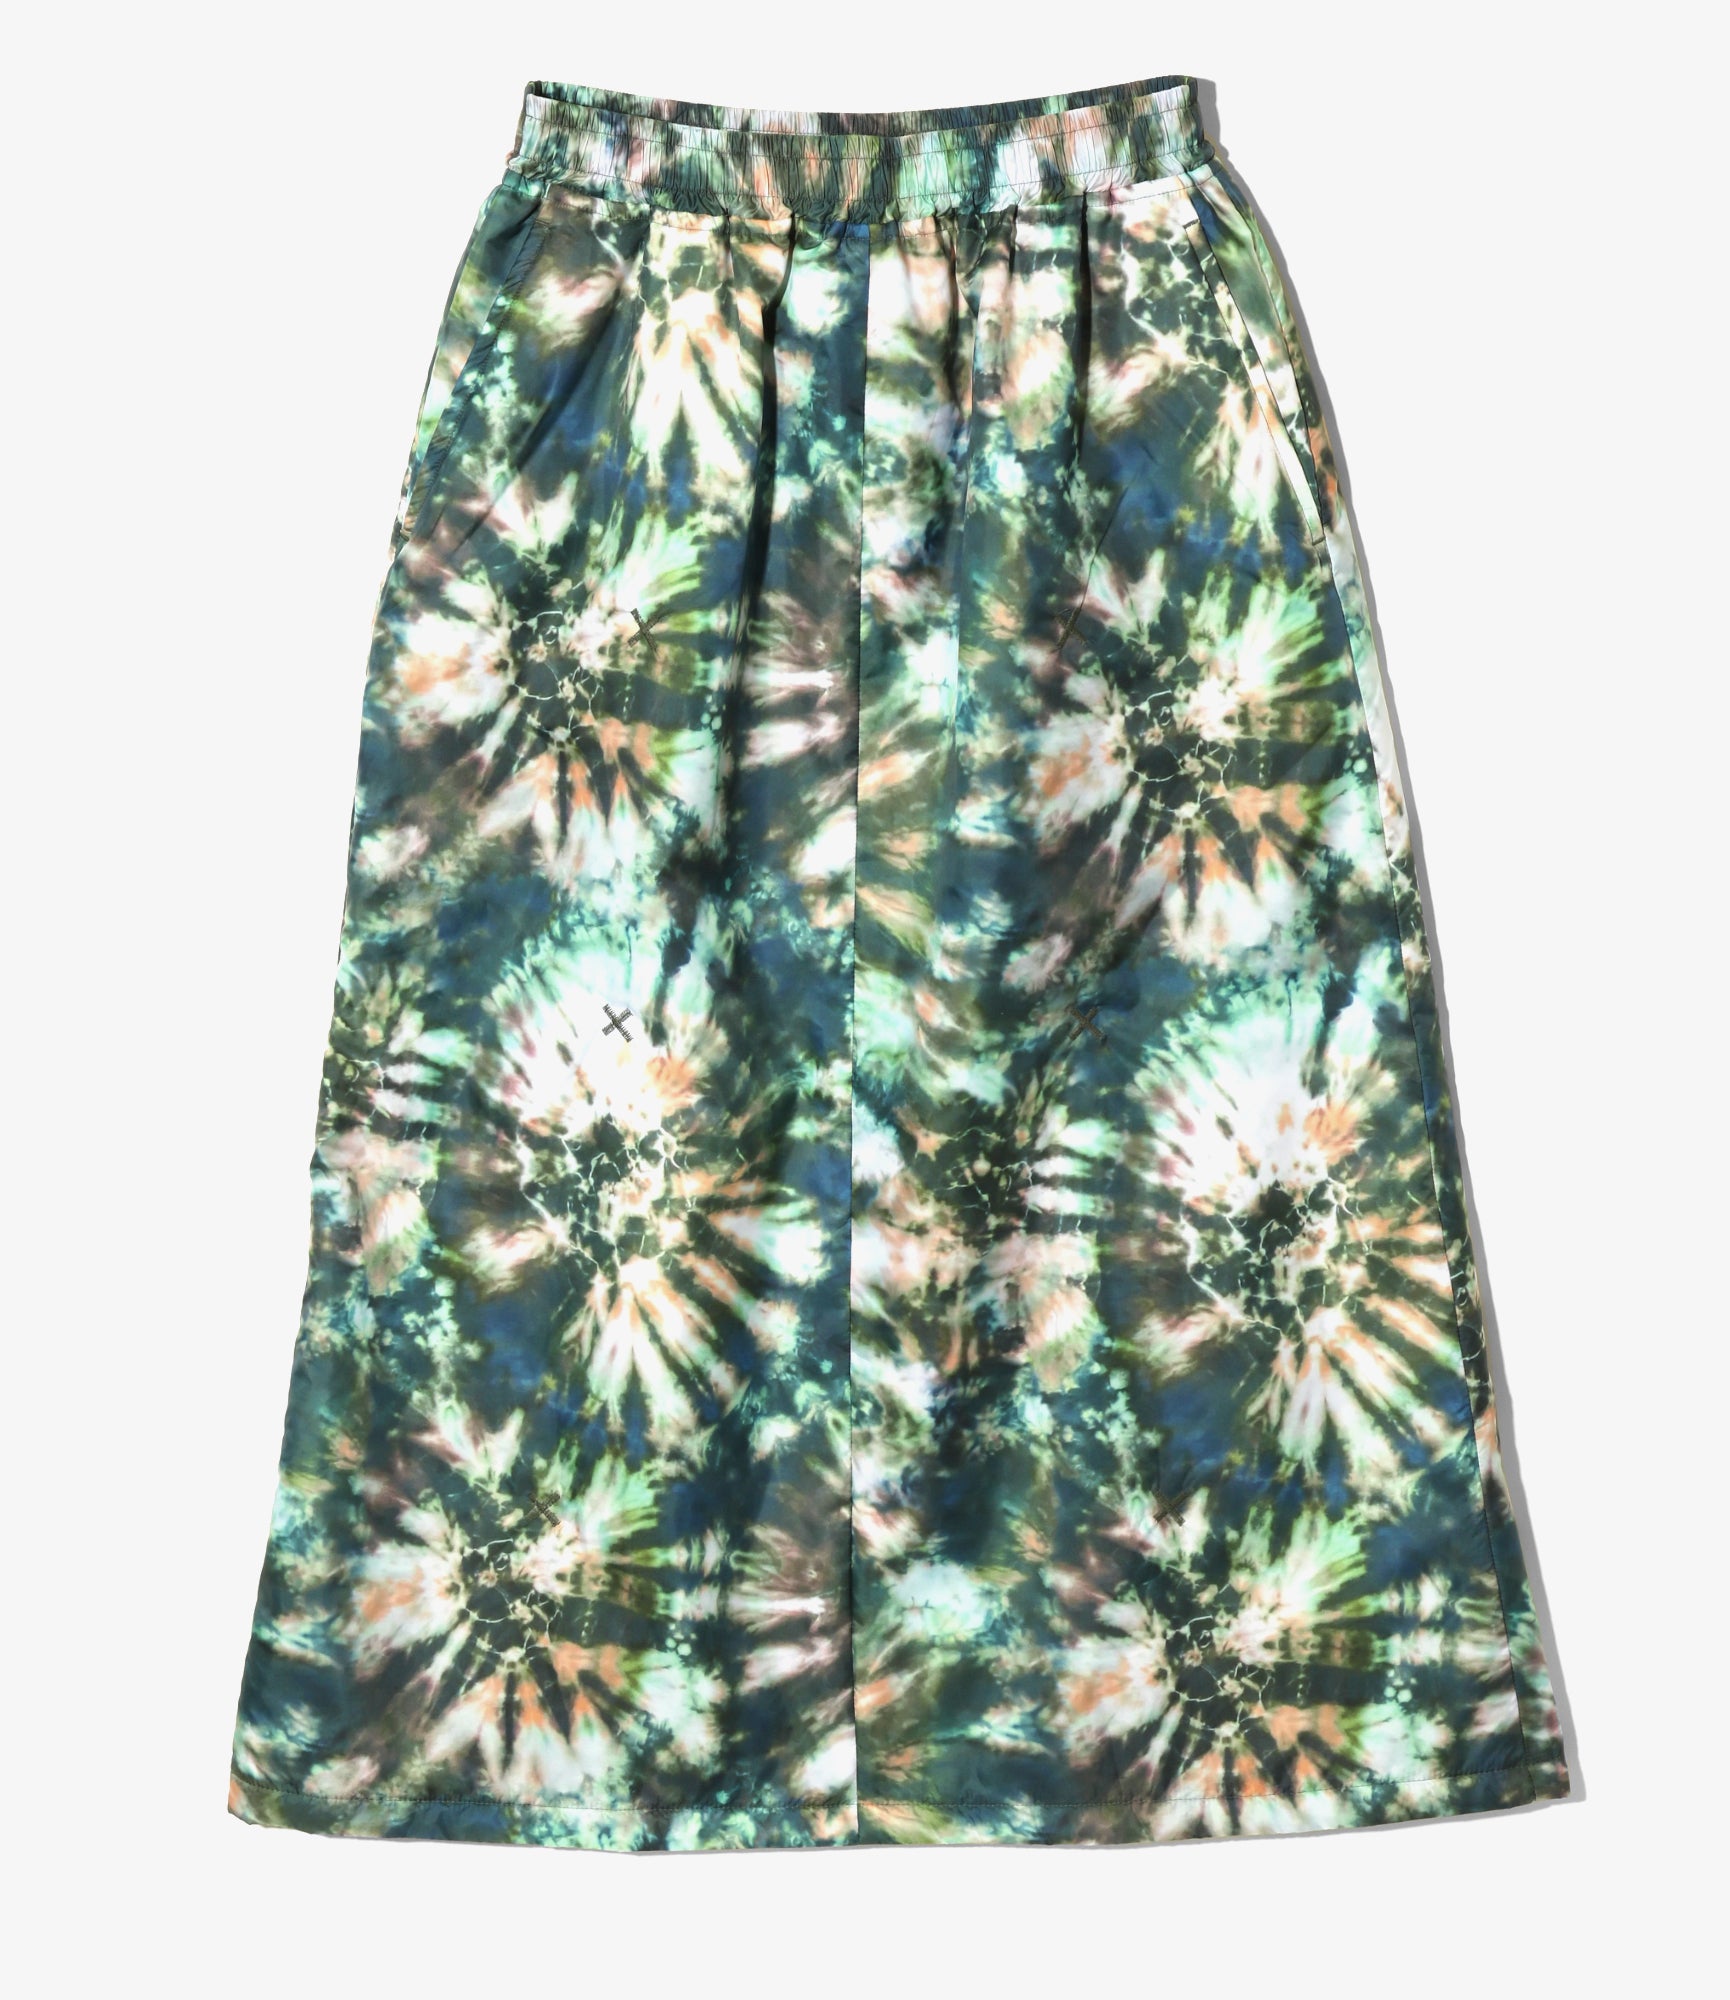 Filling String Skirt - Green - Poly Taffeta / Tie Dye Printed